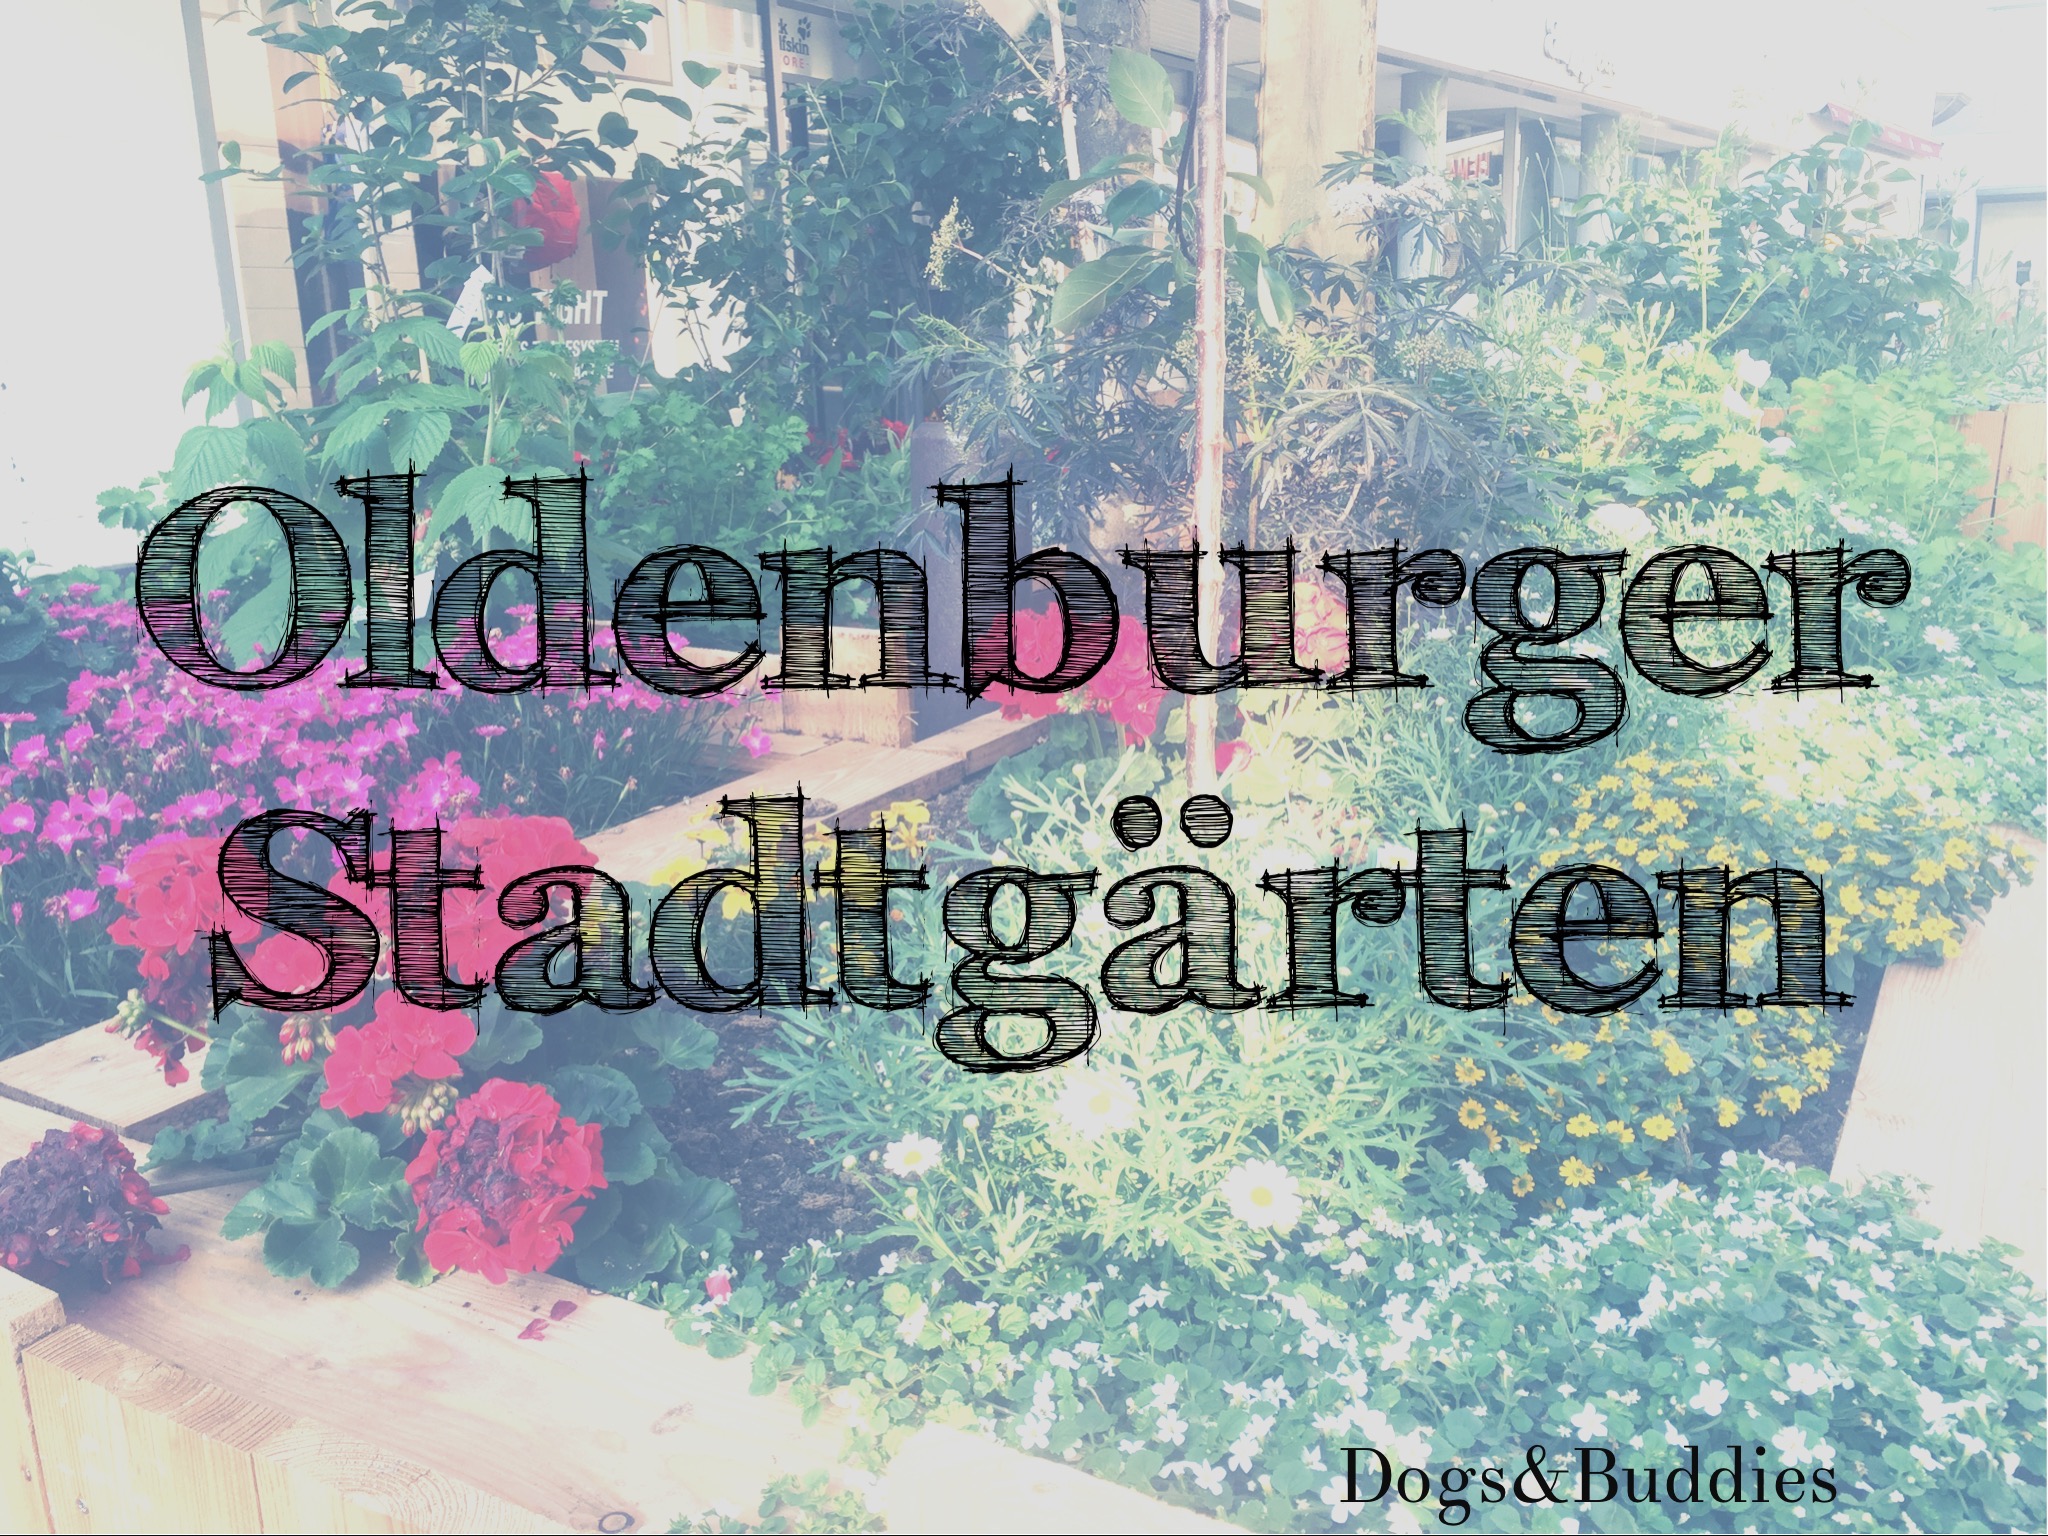 Oldenburger Stadtgärten